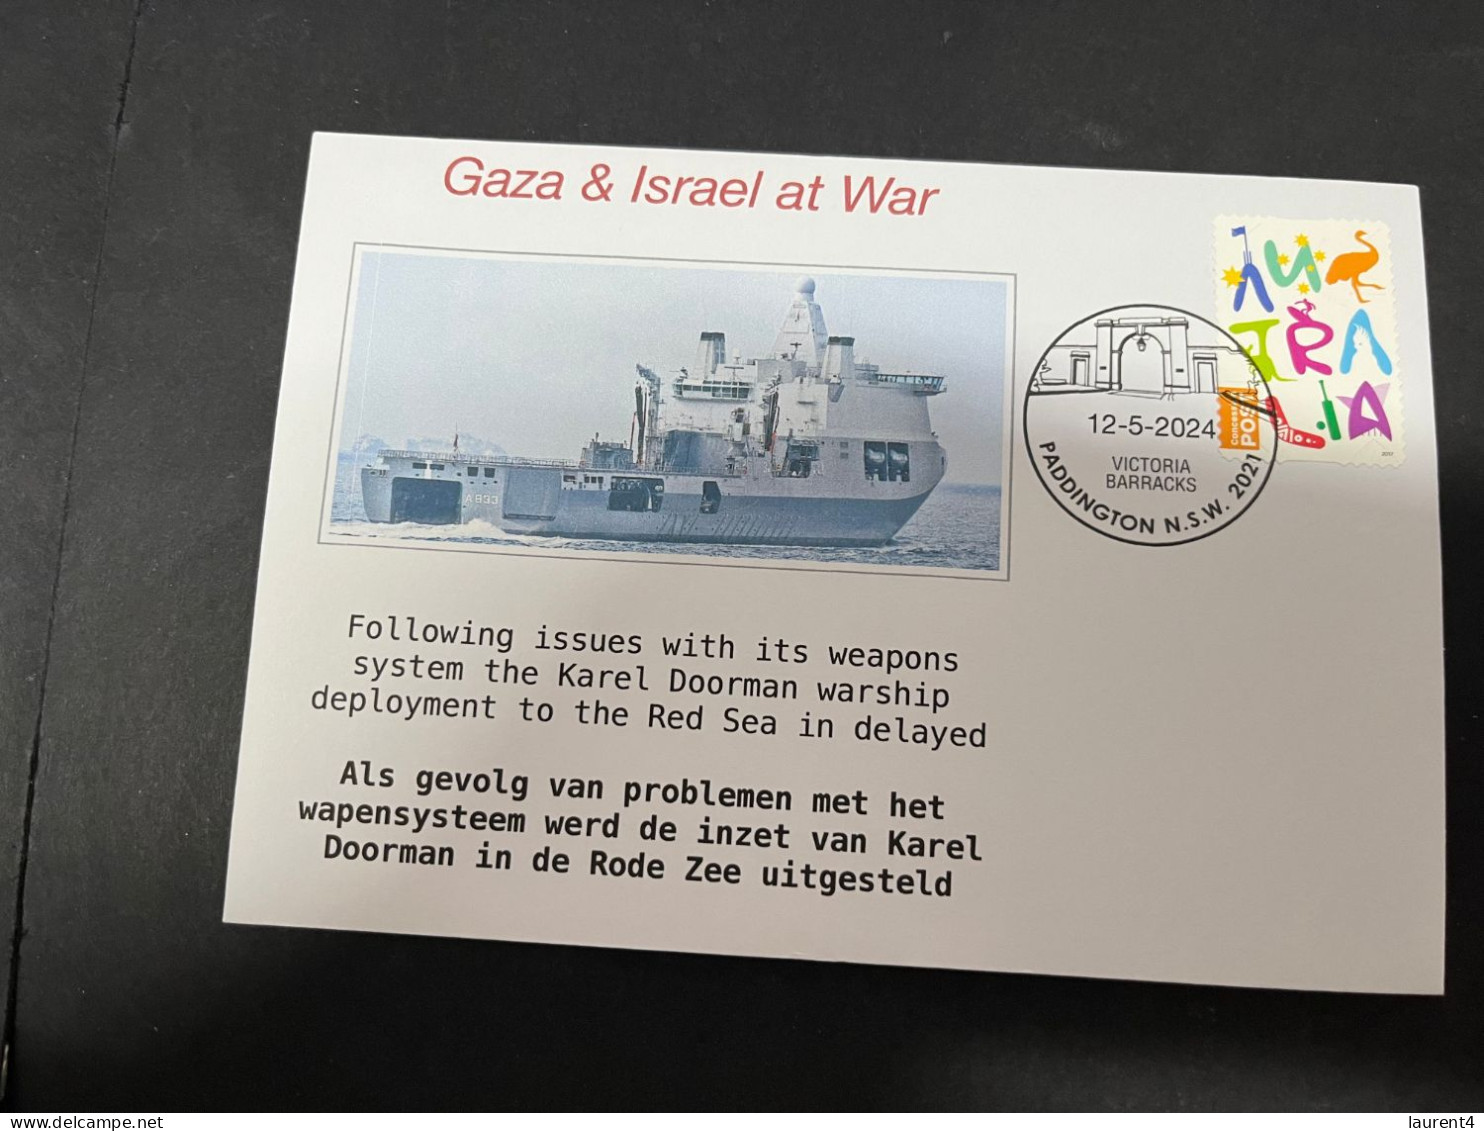 17-5-2024 (5 Z 23) GAZA War - Netherlands Karel Doorman Warship Deployment To The Red Sea Delayed - Militaria